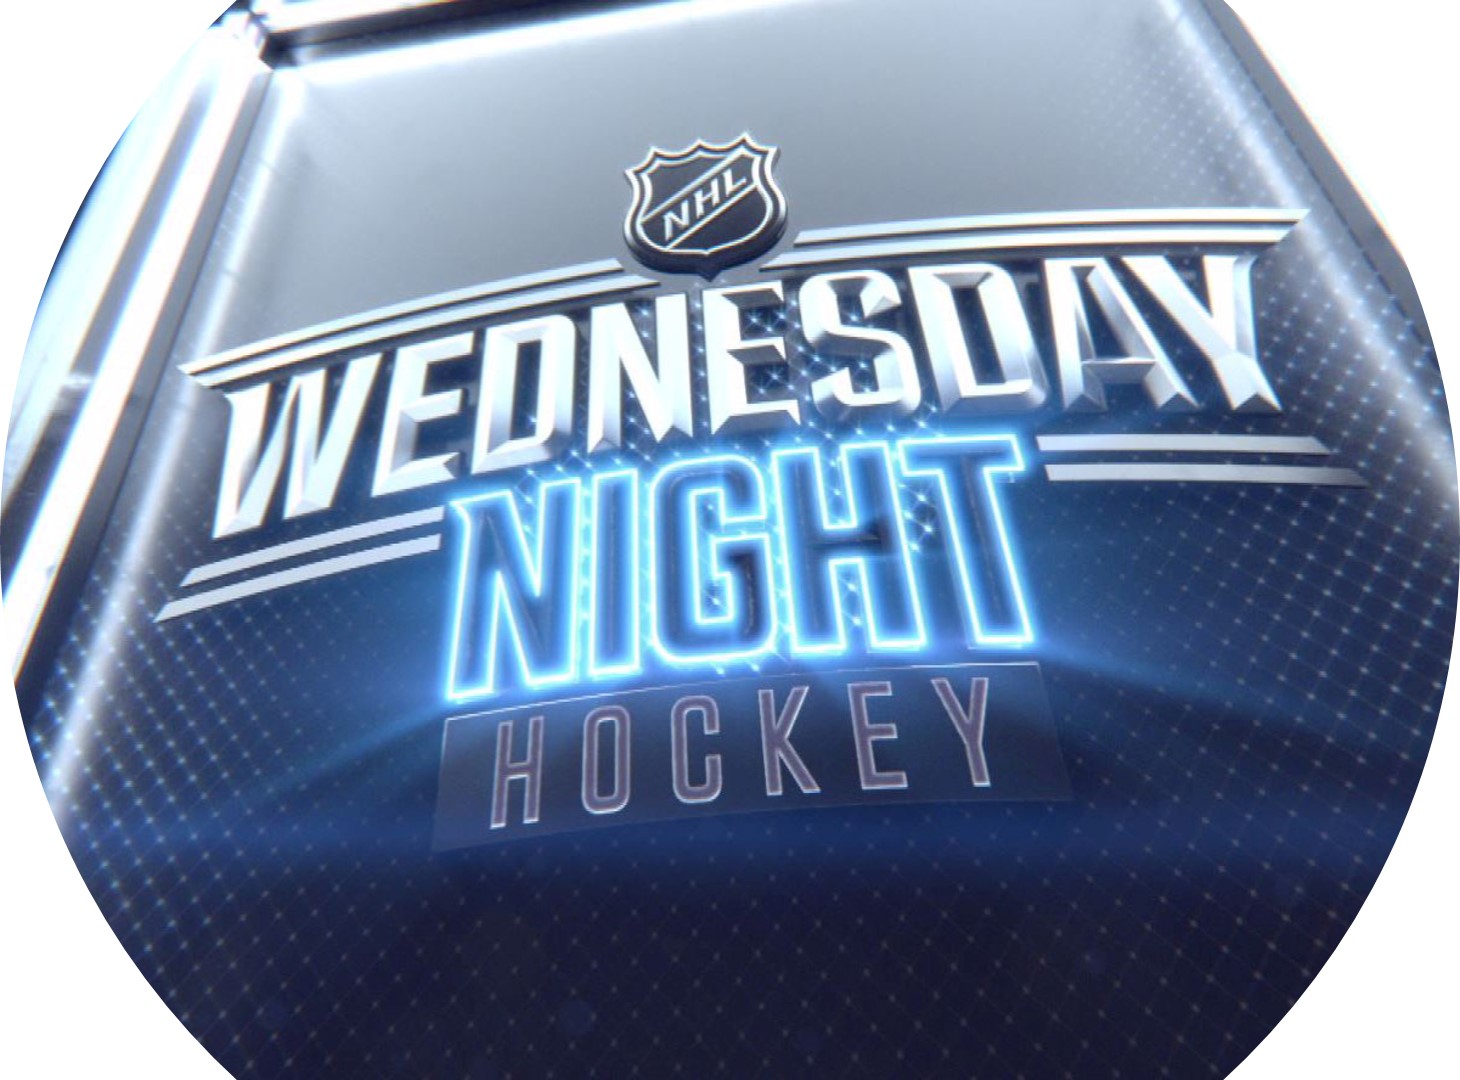 Washington Capitals Vs Boston Bruins – Prime Time Events – NHL – Fantasy Sports Gaming Newsletter